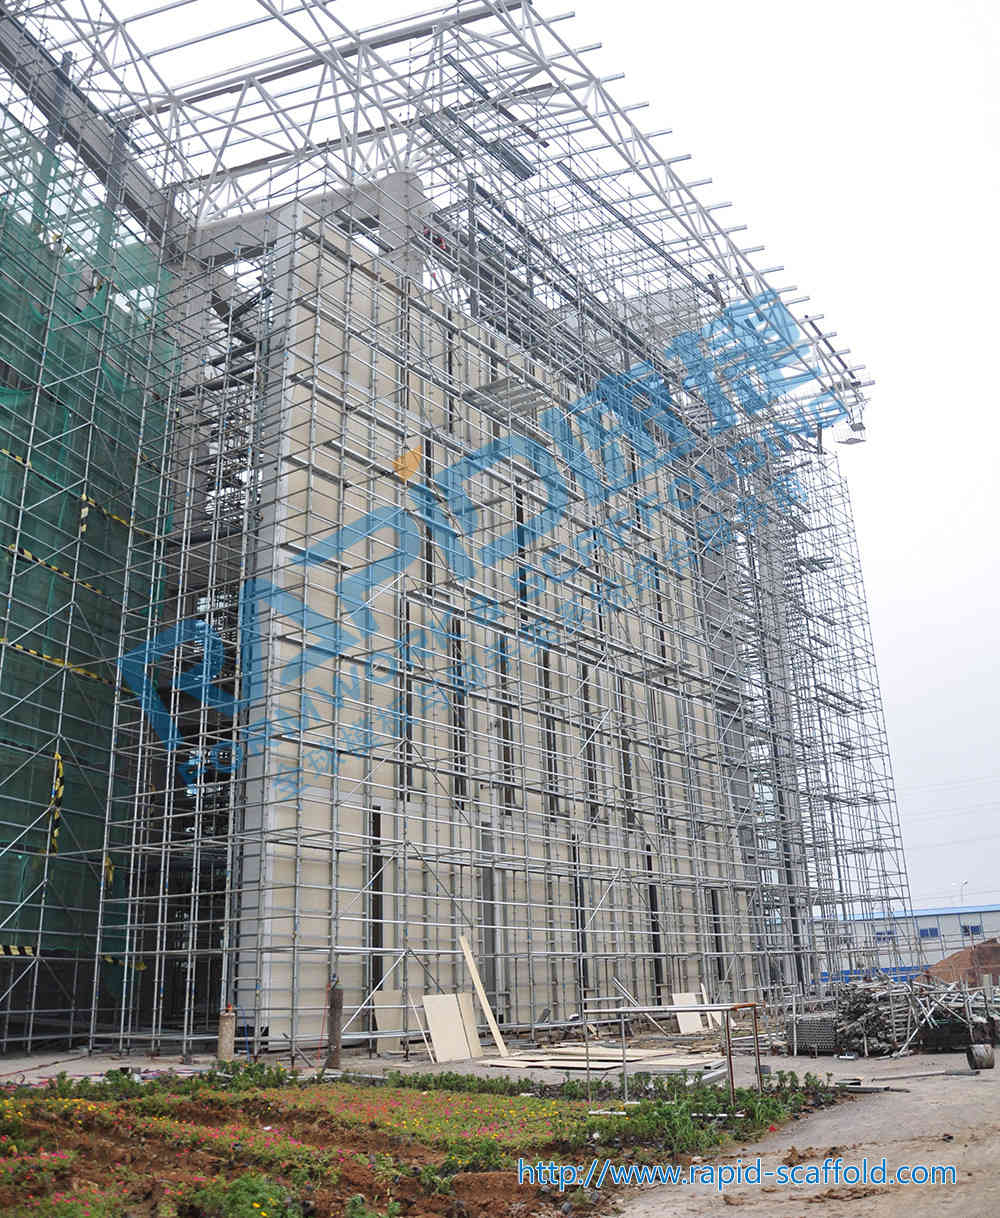 Ma’anshan Exhibition Center Stadium Working Platform